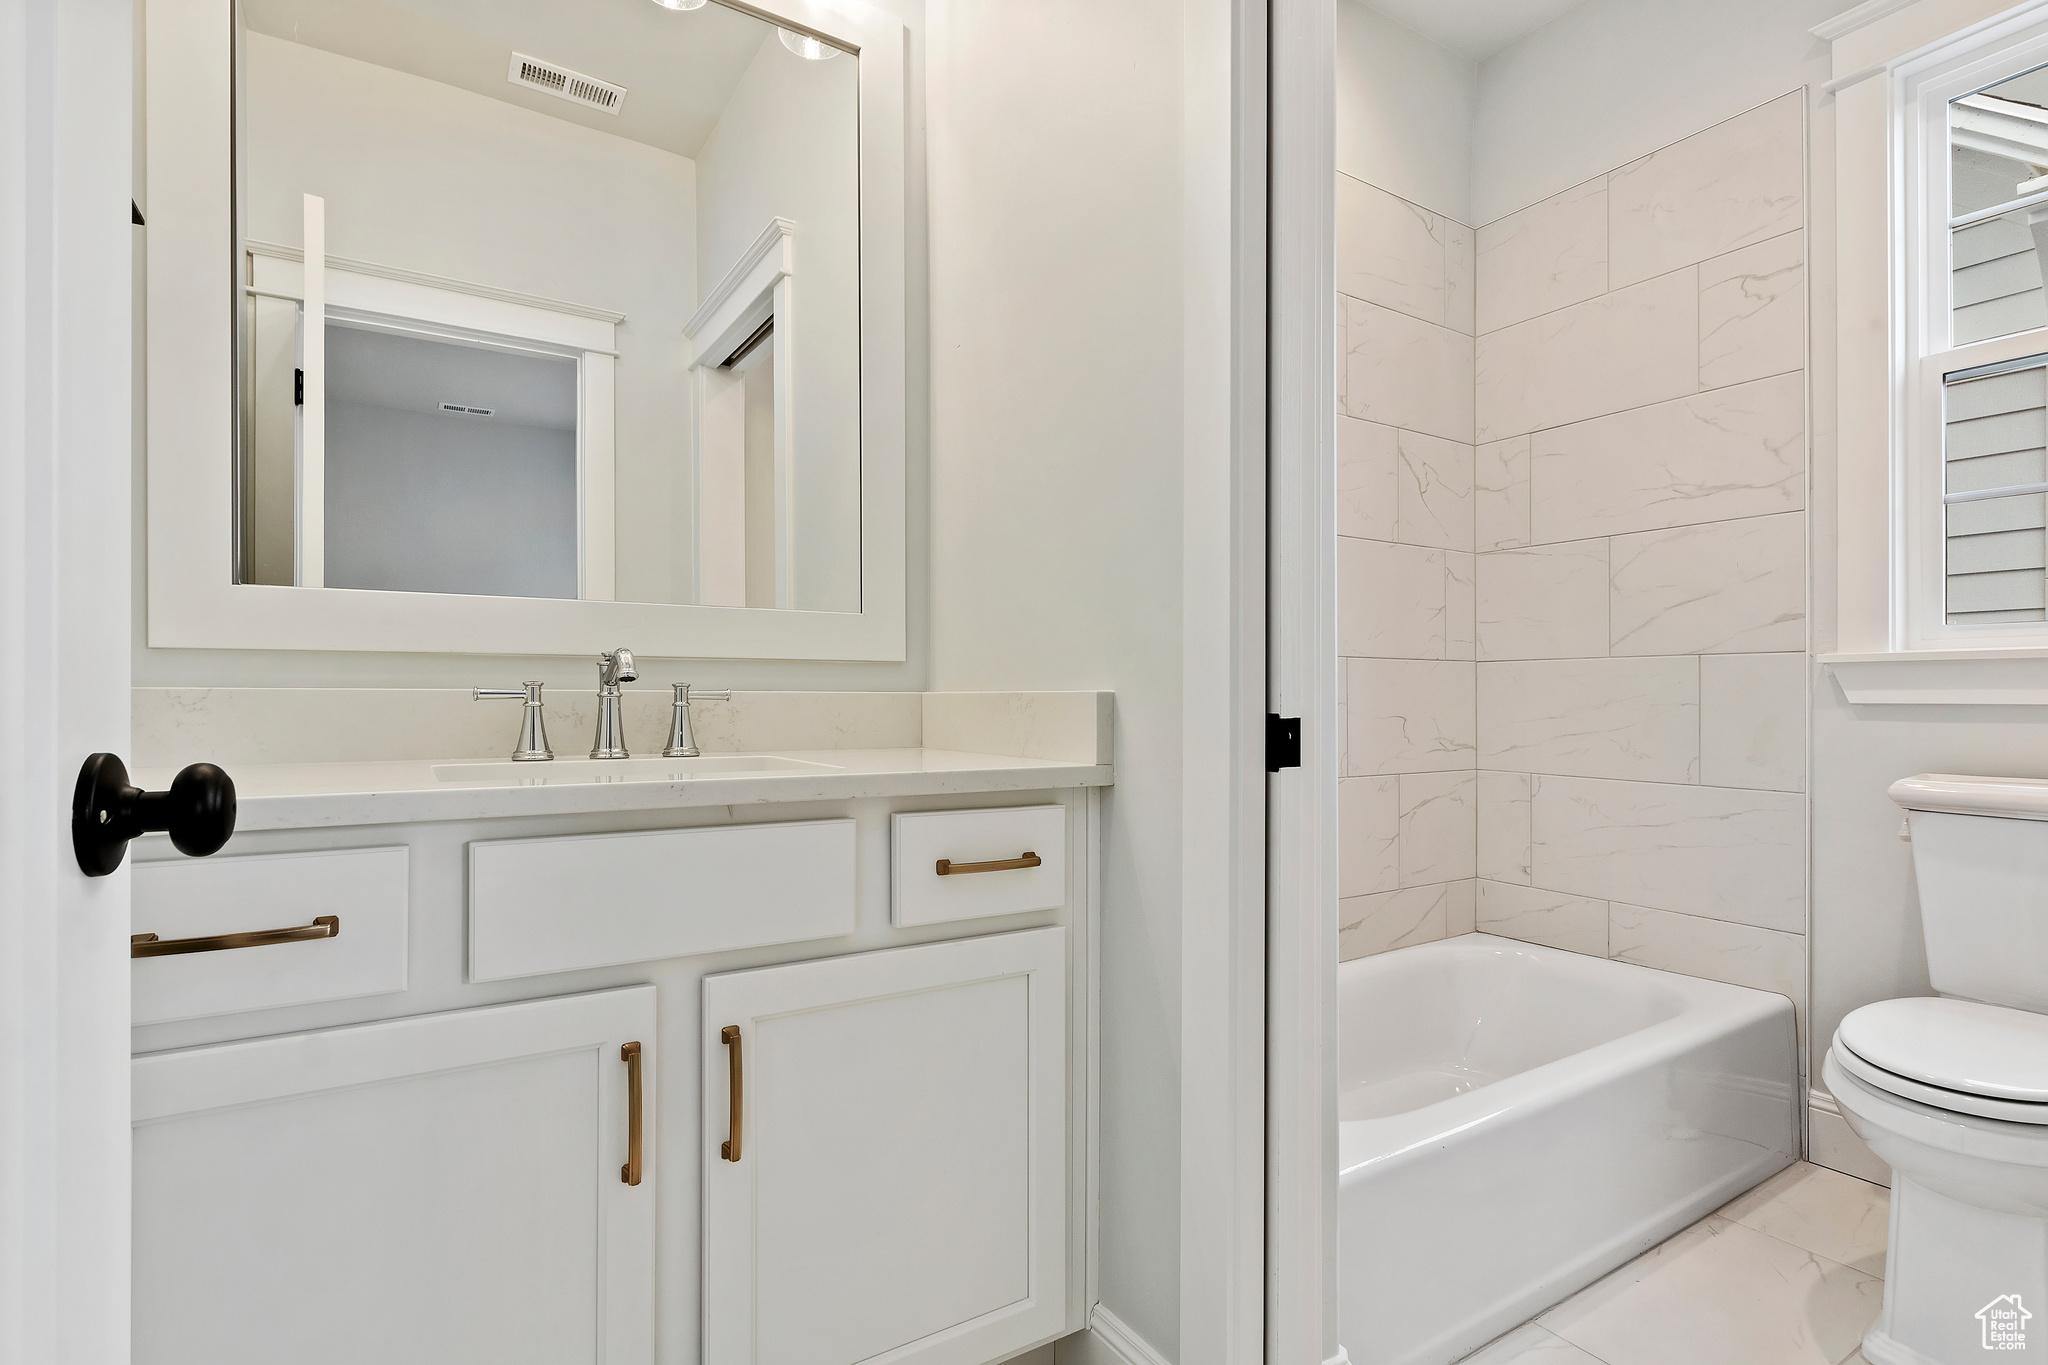 Full bathroom with tile floors, tiled shower / bath, vanity, and toilet